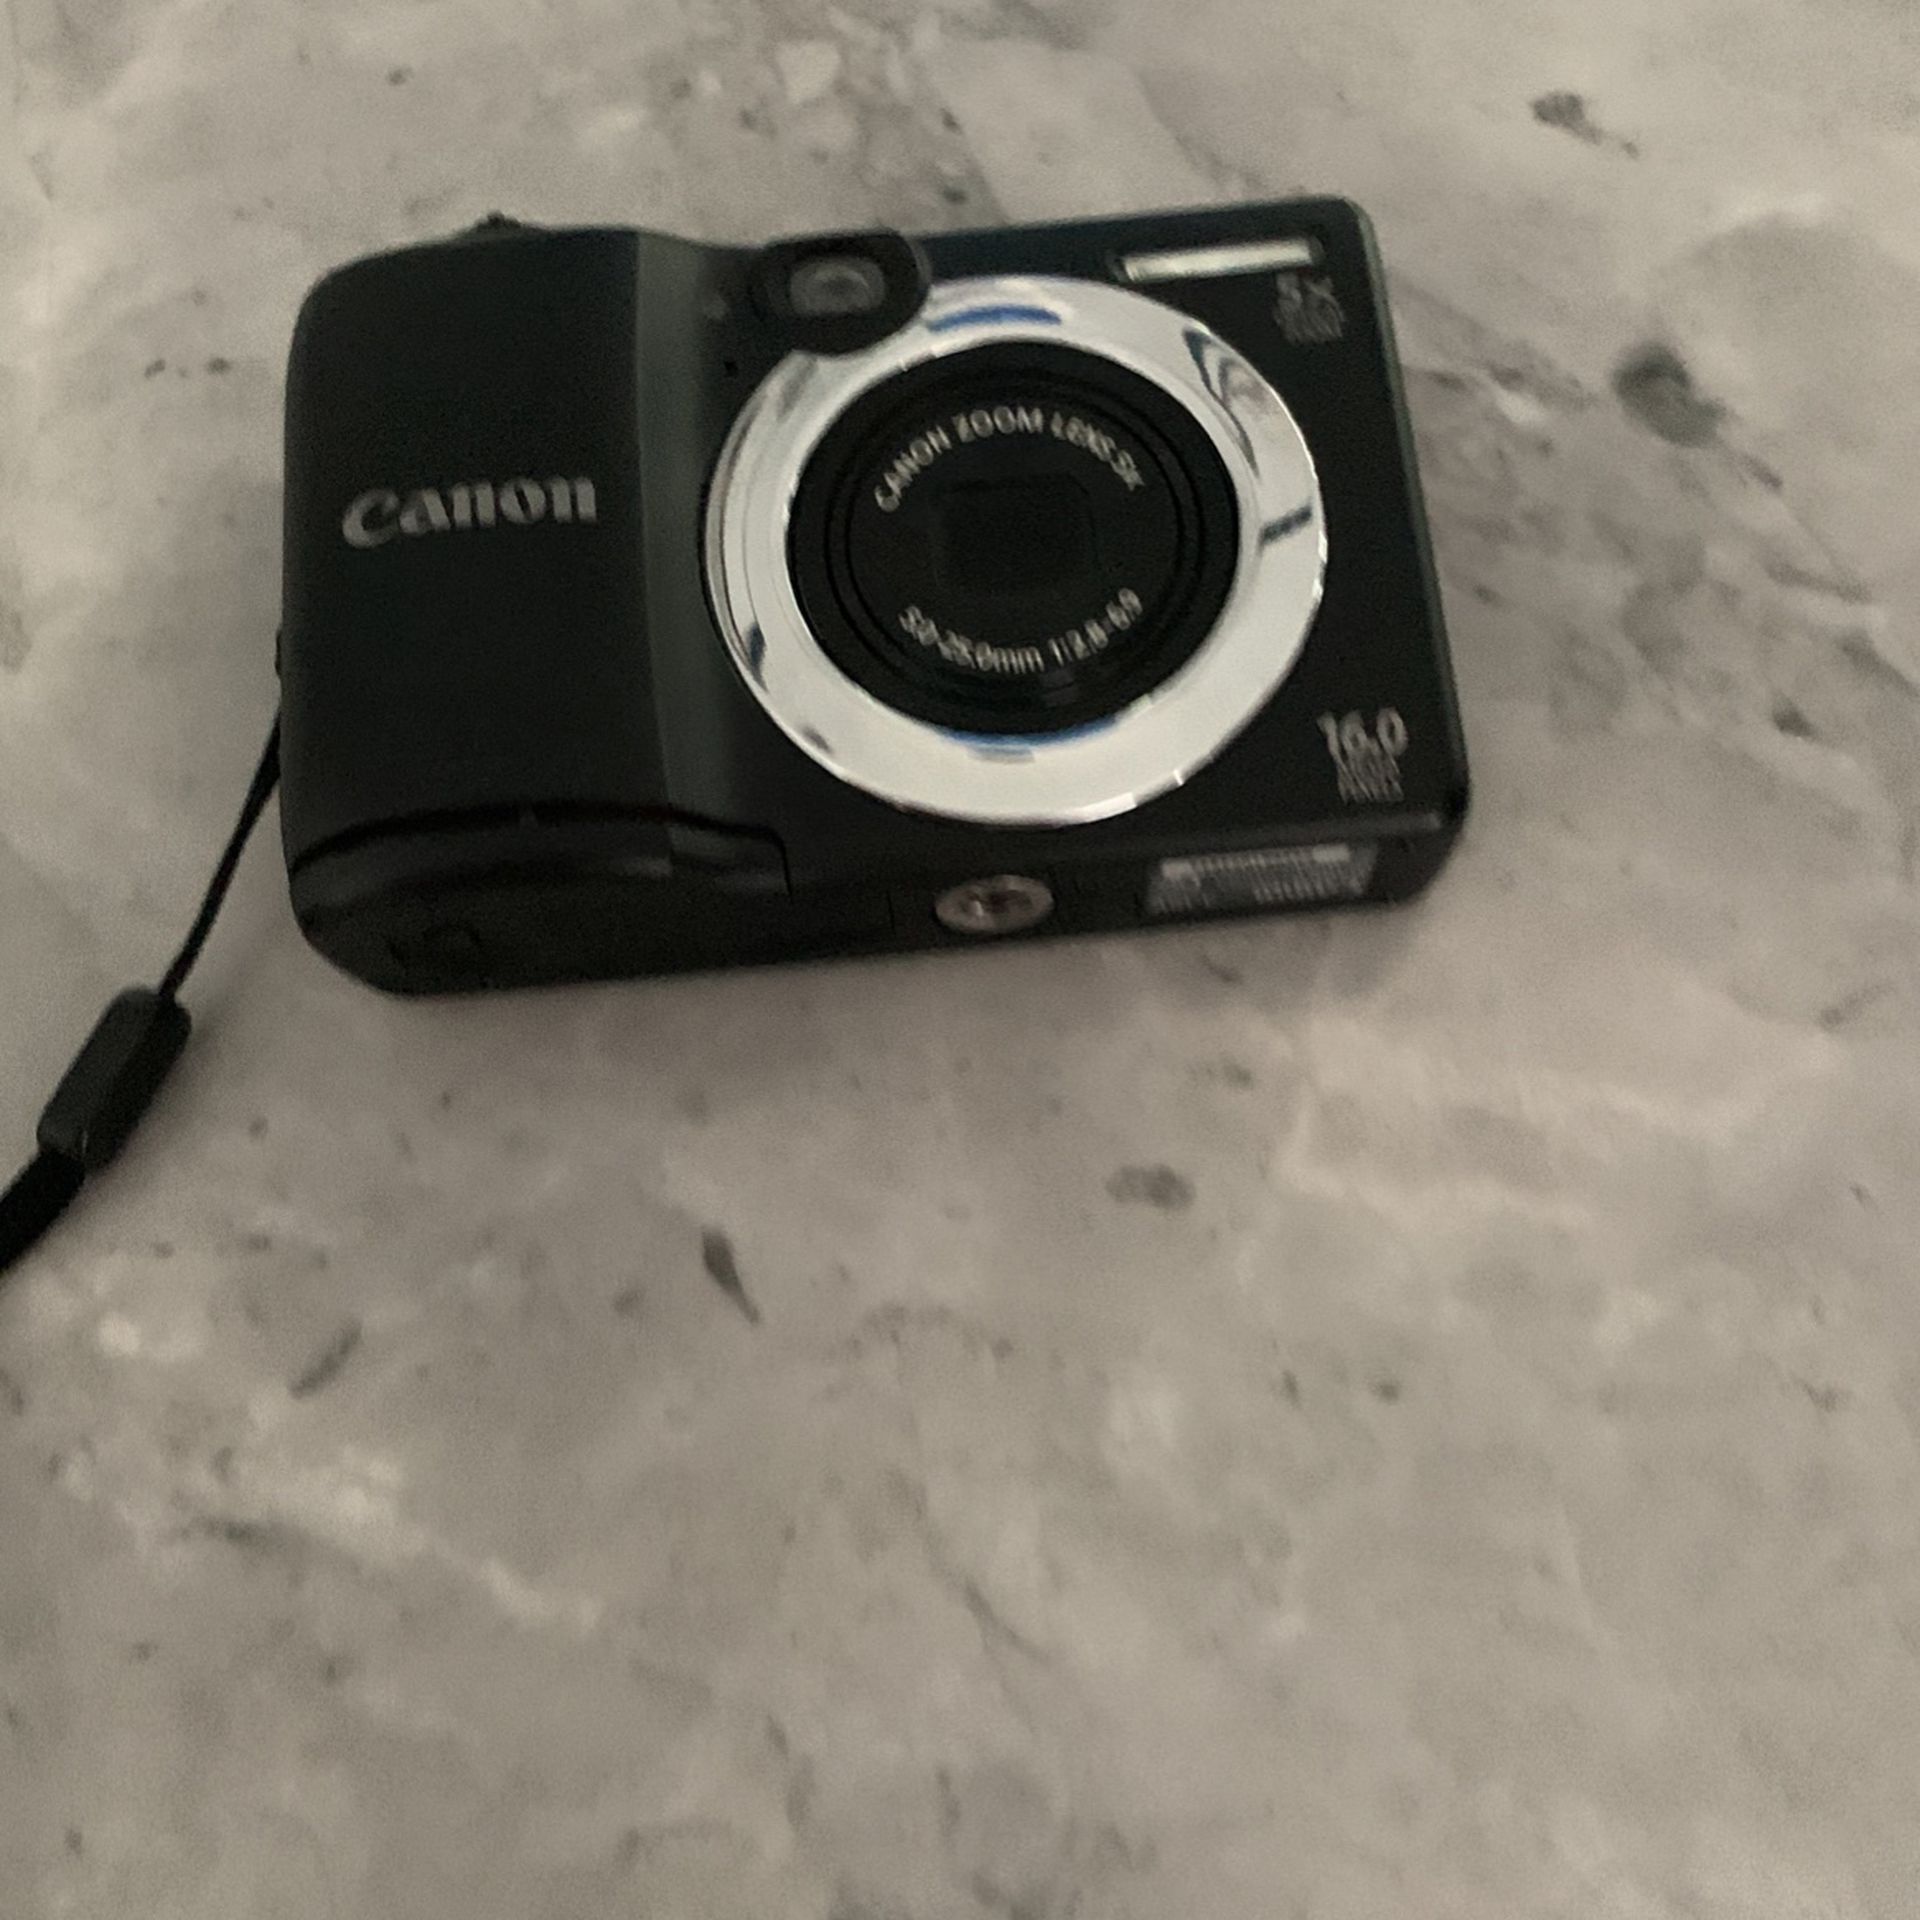 Cannon PowerShot Camera A1400